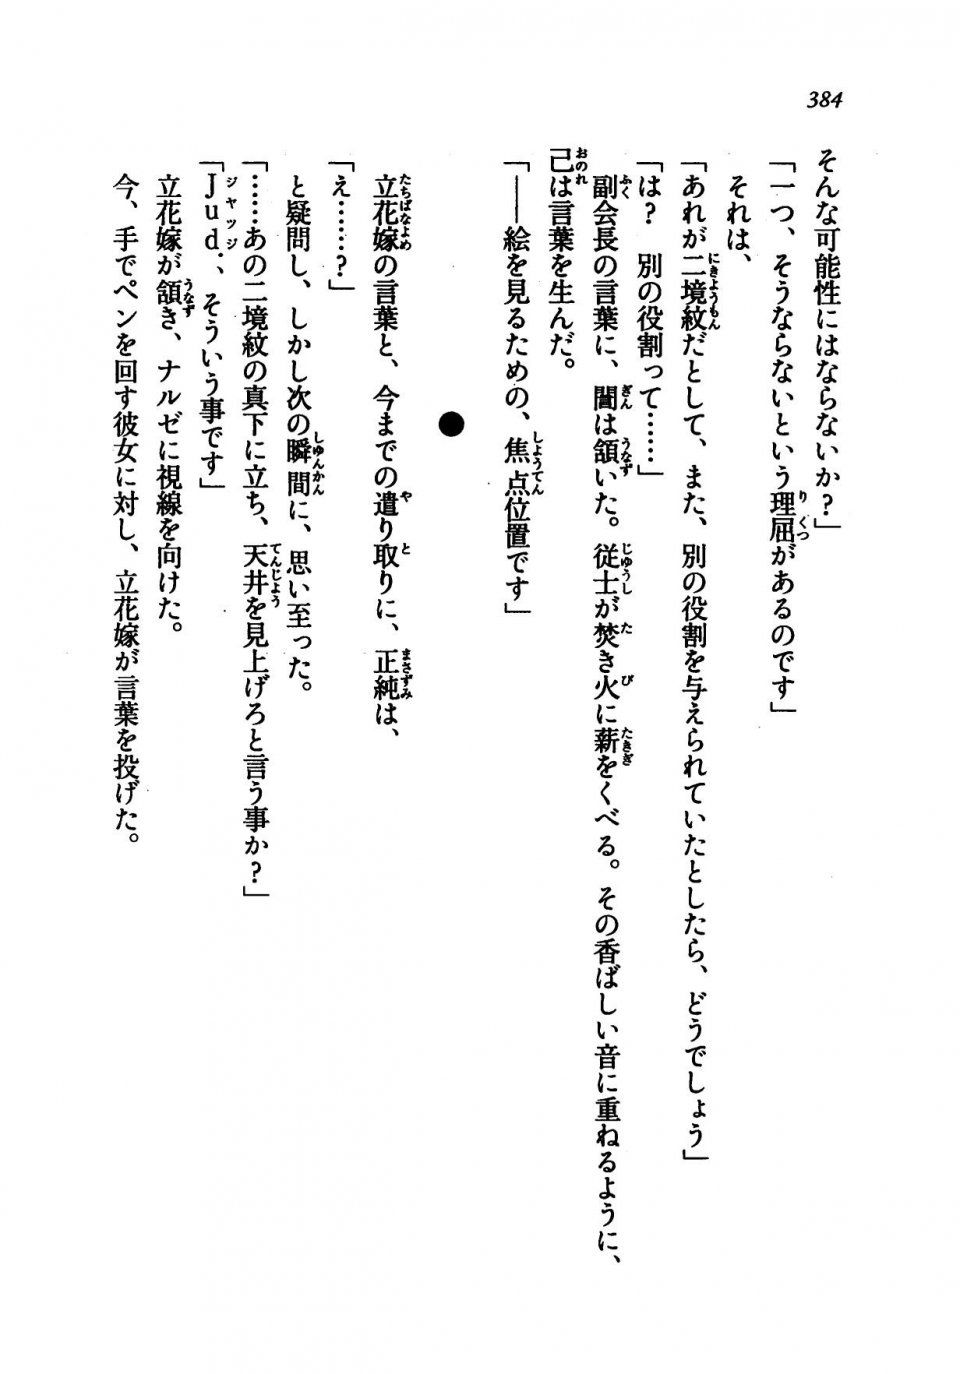 Kyoukai Senjou no Horizon LN Vol 21(8C) Part 1 - Photo #383